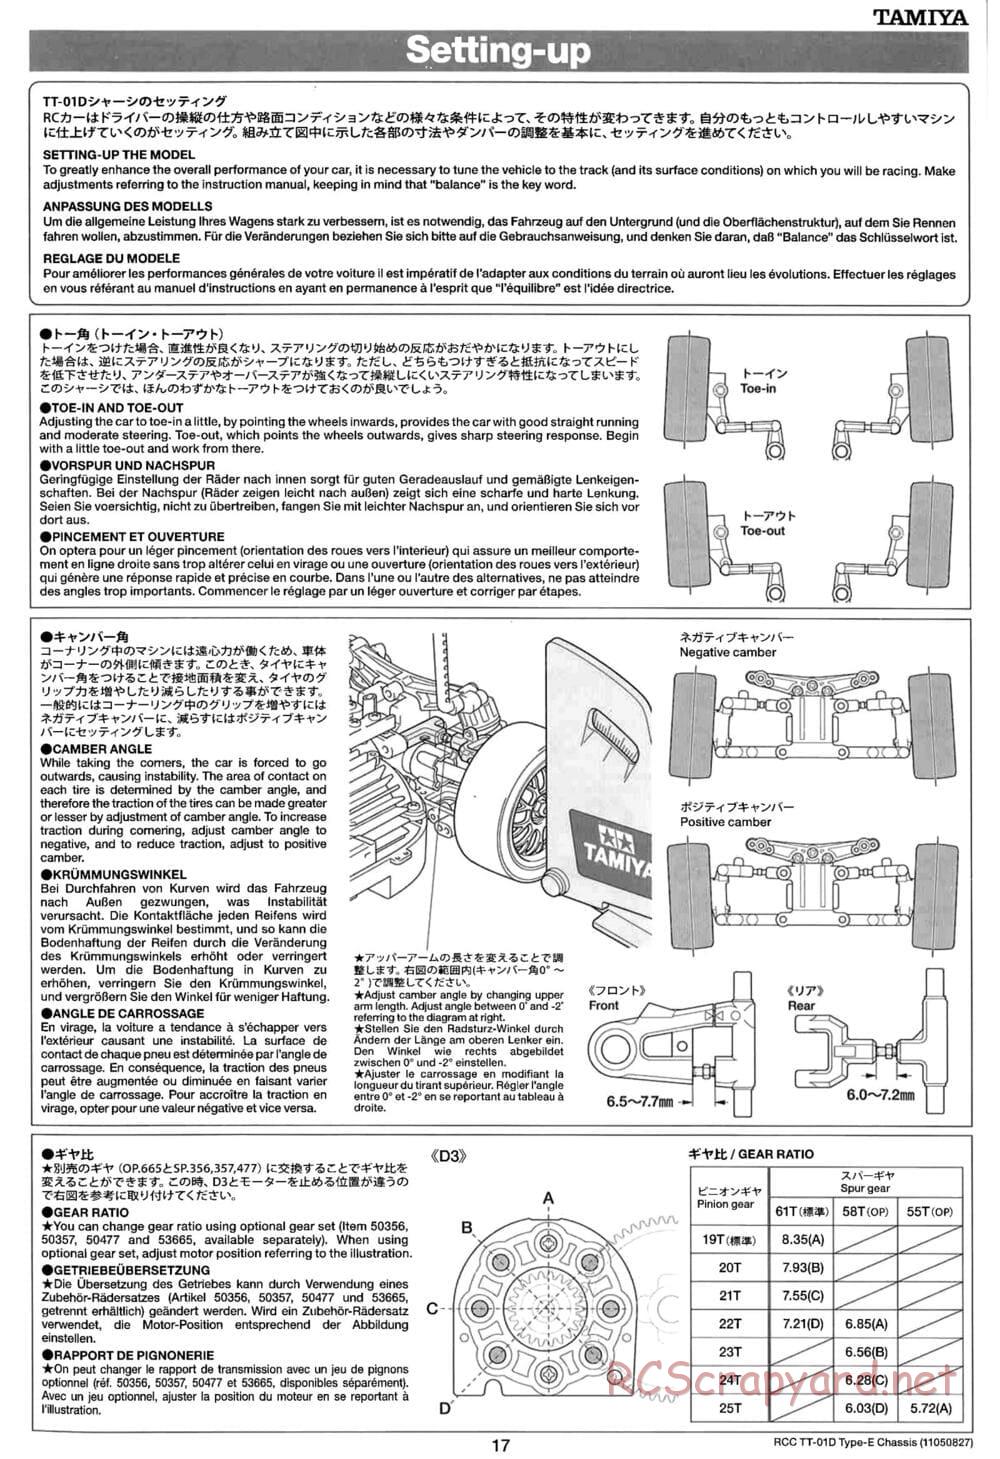 Tamiya - TT-01D Type-E (TT-01ED) - Drift Spec Chassis - Manual - Page 17